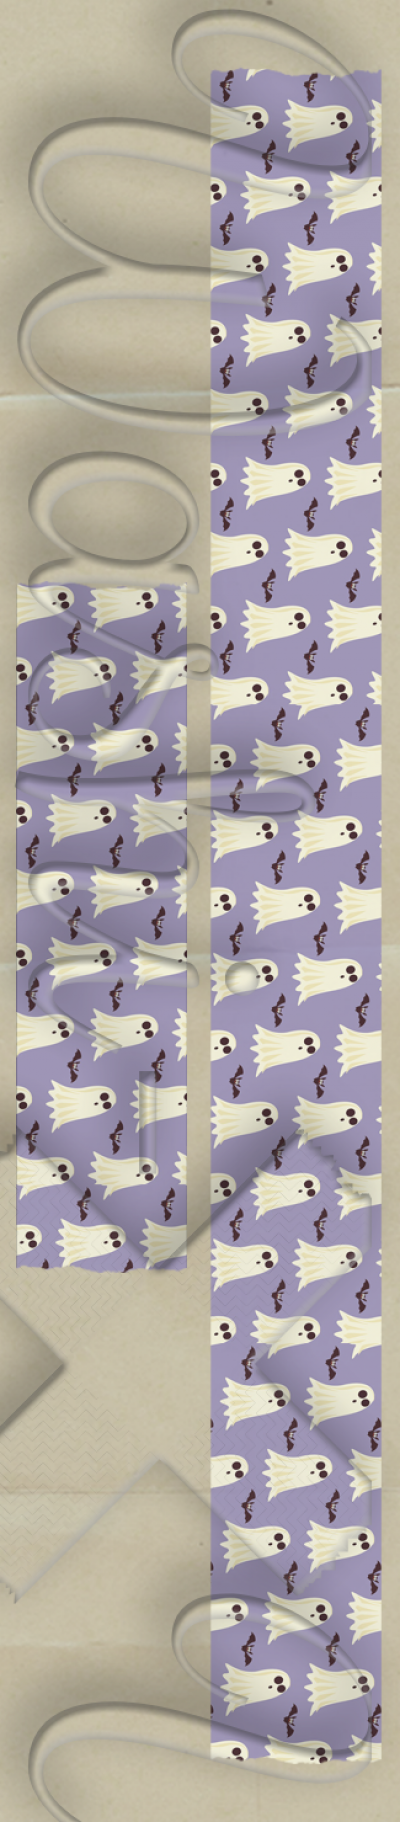 Washi-X Washi Tape Ghosts patterned washi tape